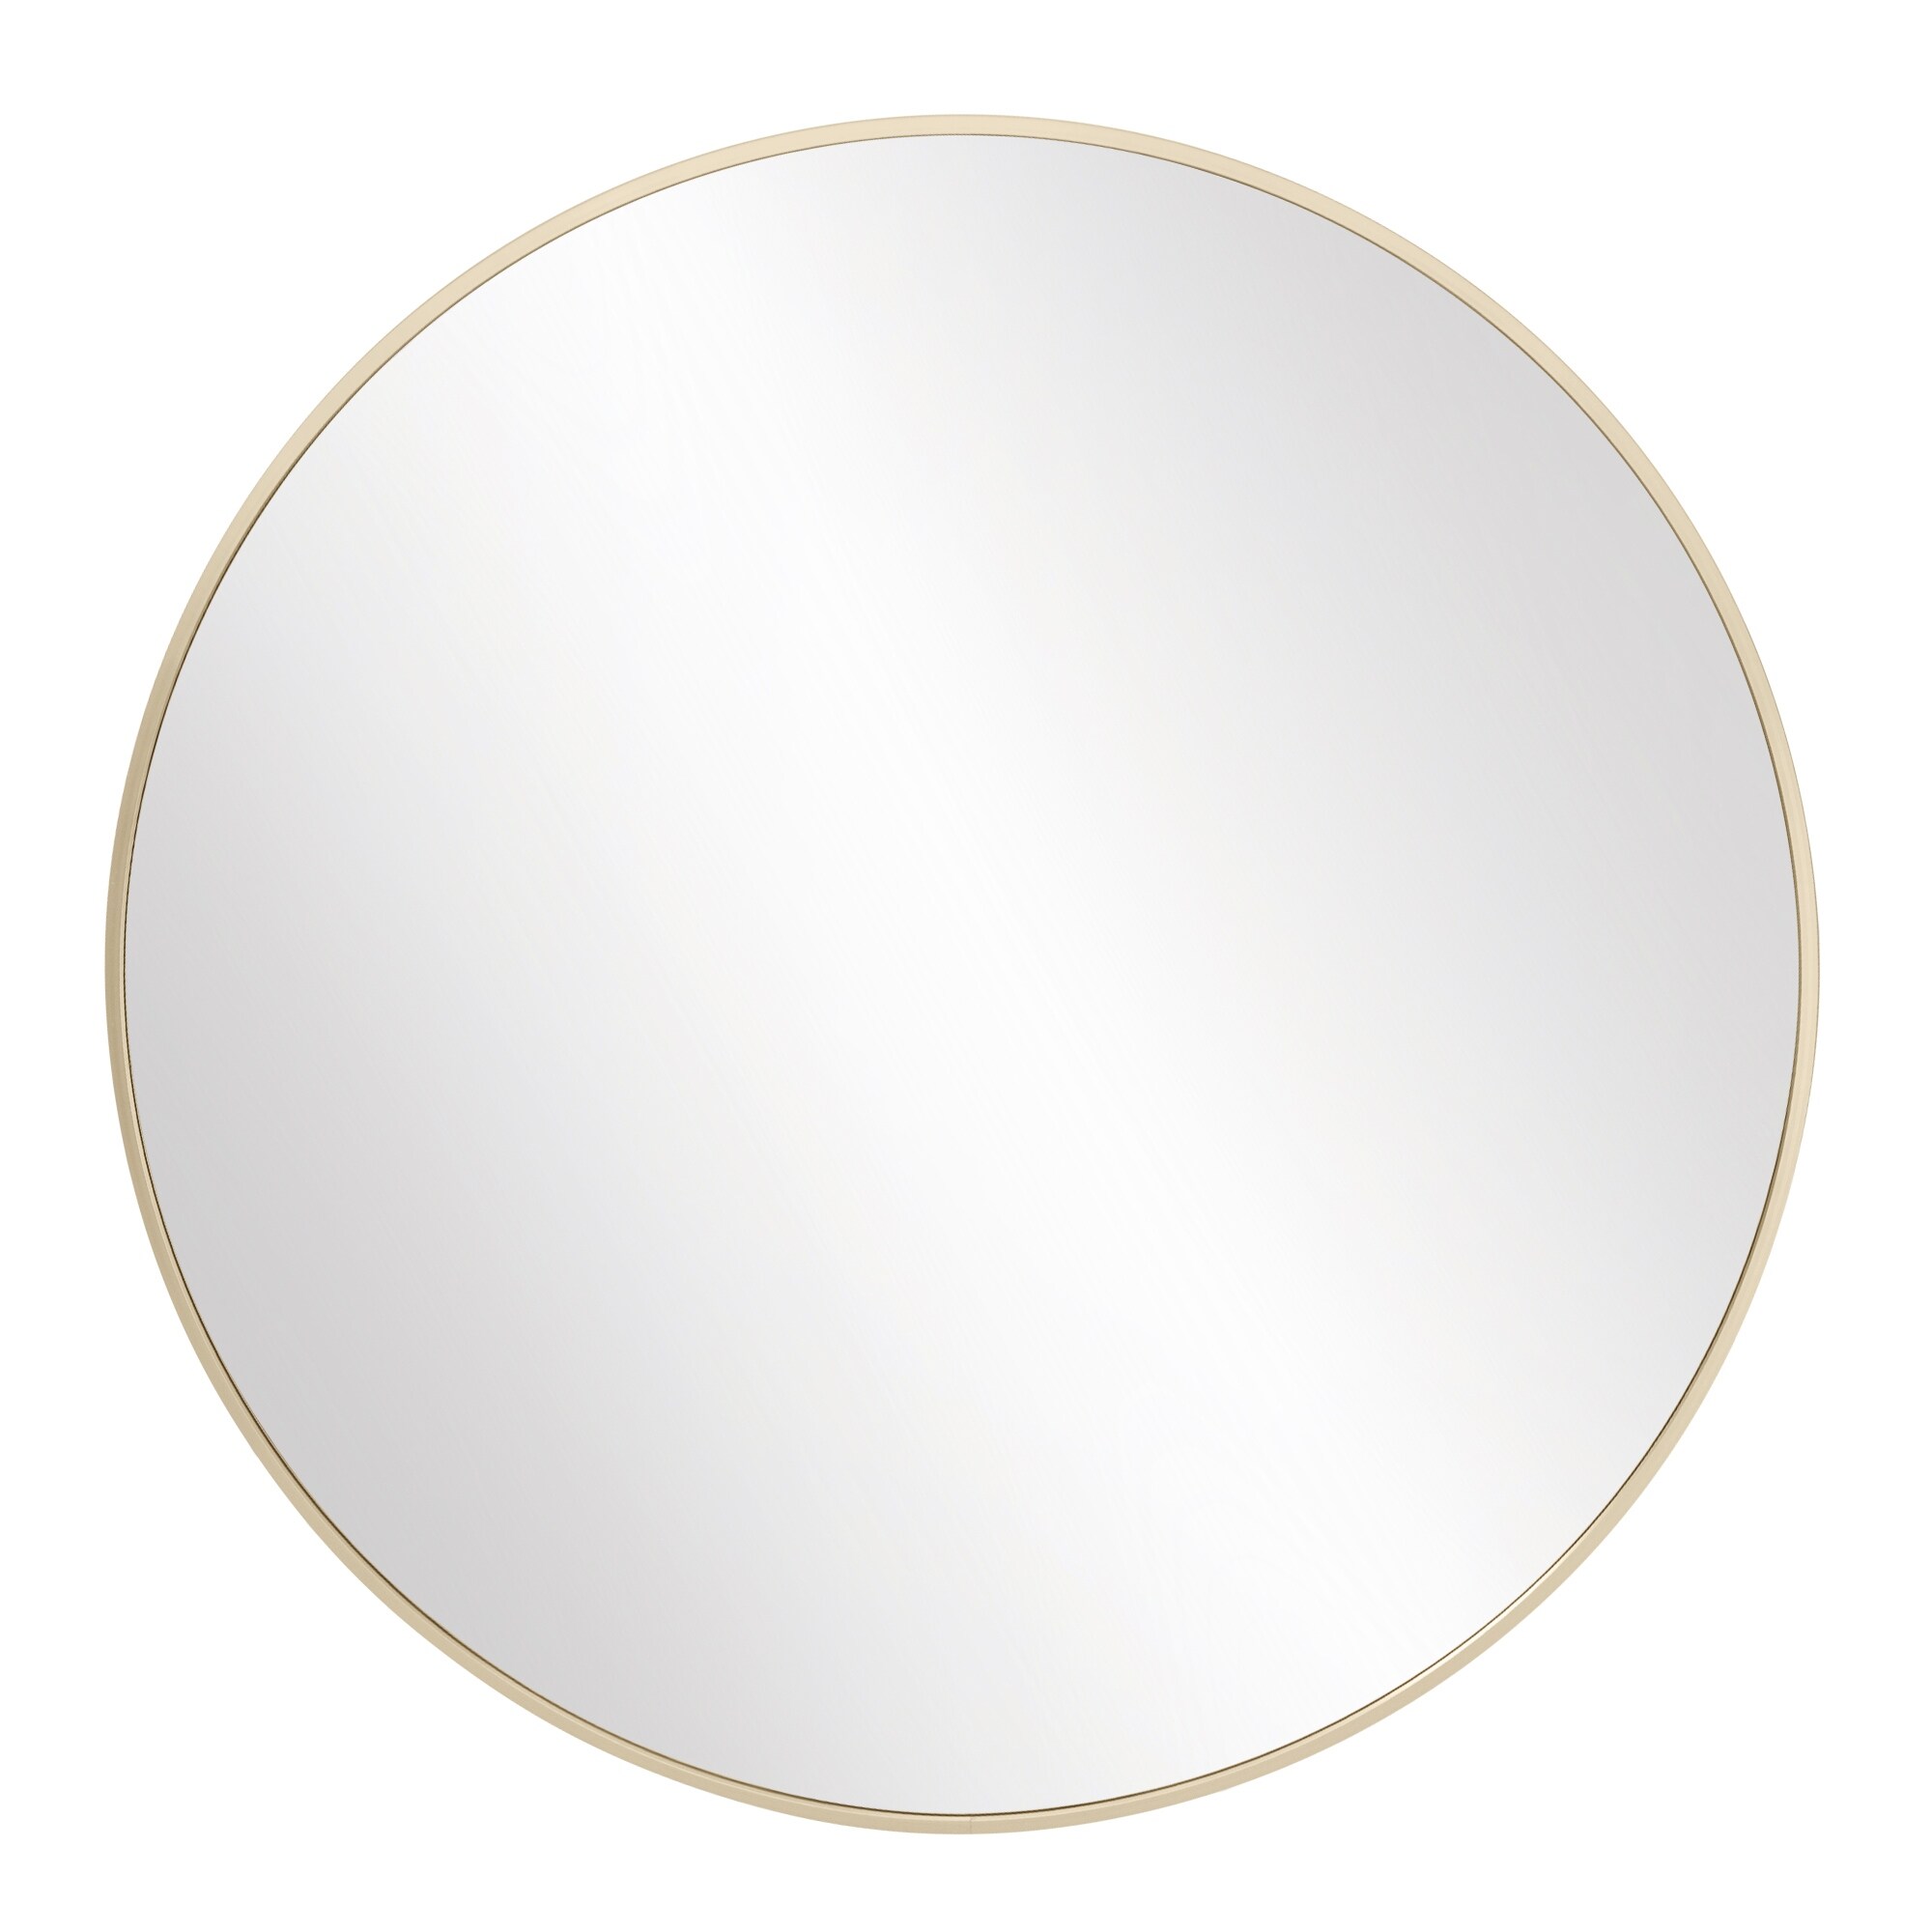 Design House 596536-GLD Kenna 36-Inch Modern Metal Framed Round Decorative Wall Accent Mirror